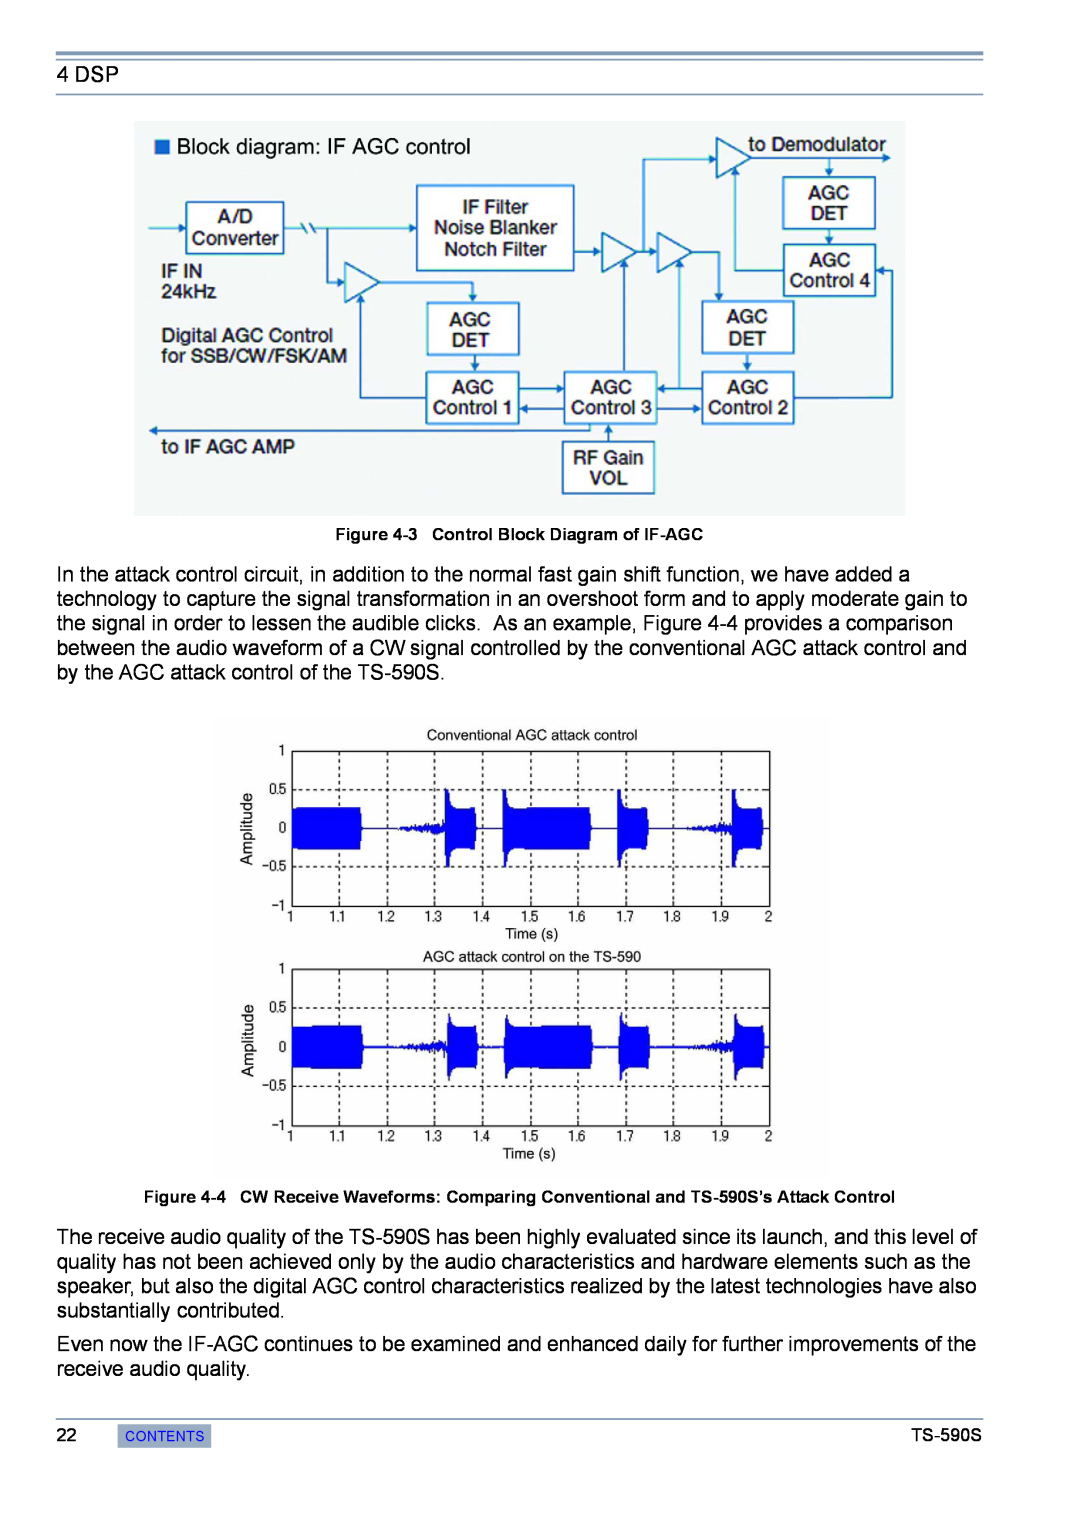 Kenwood TS-590S manual 4 DSP, 3Control Block Diagram of IF-AGC 